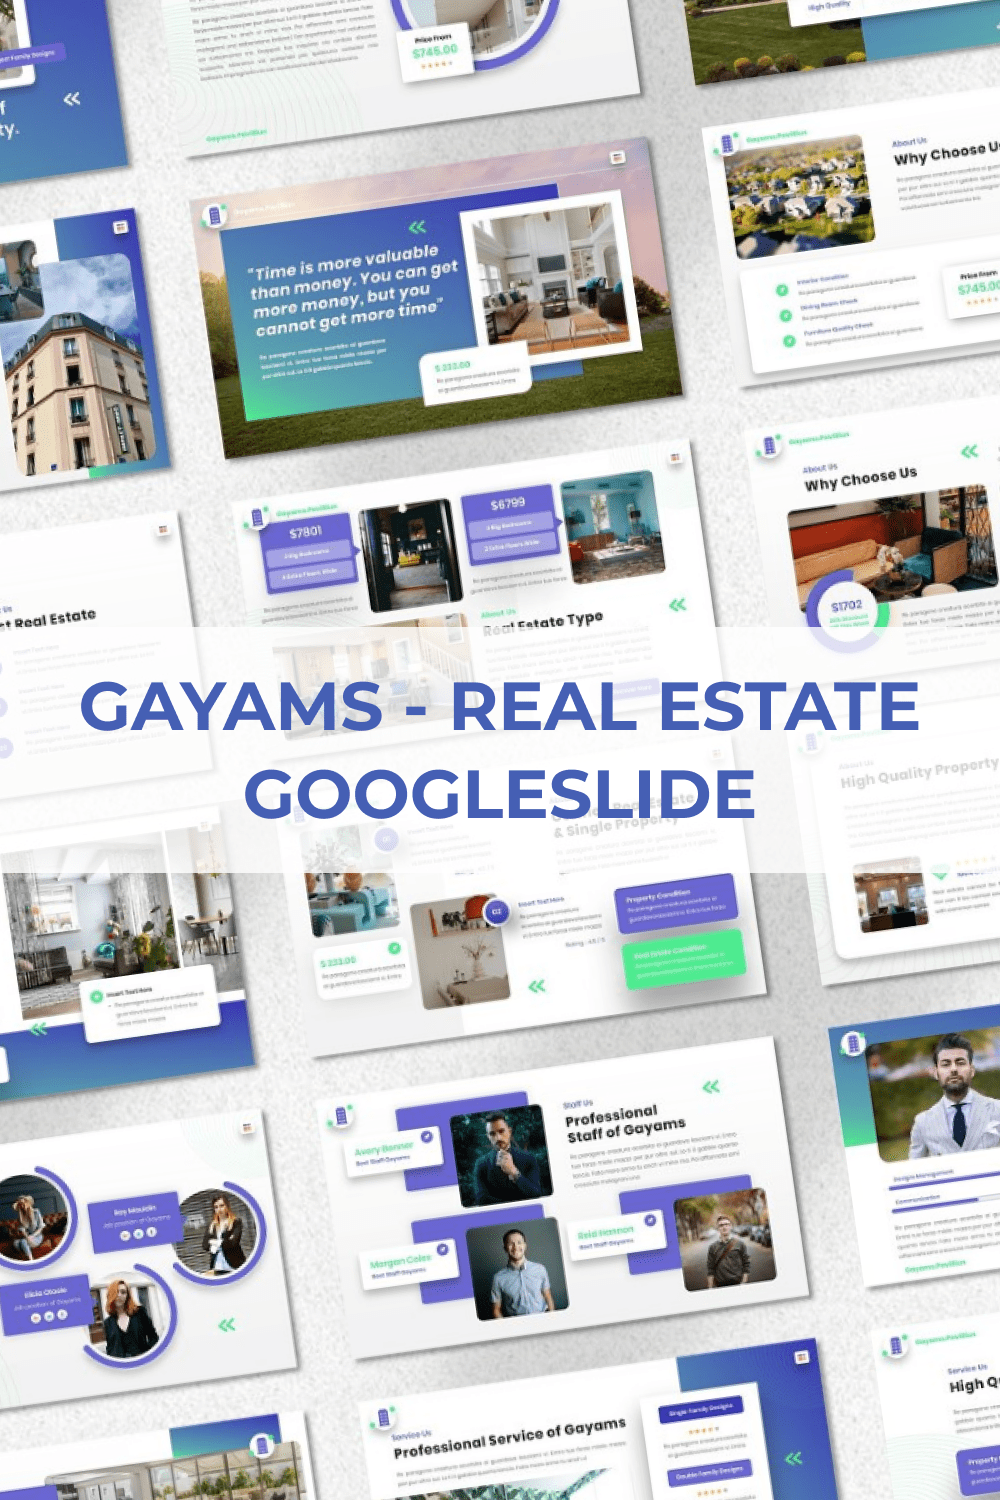 Gayams - Real Estate Googleslide Pinterest.